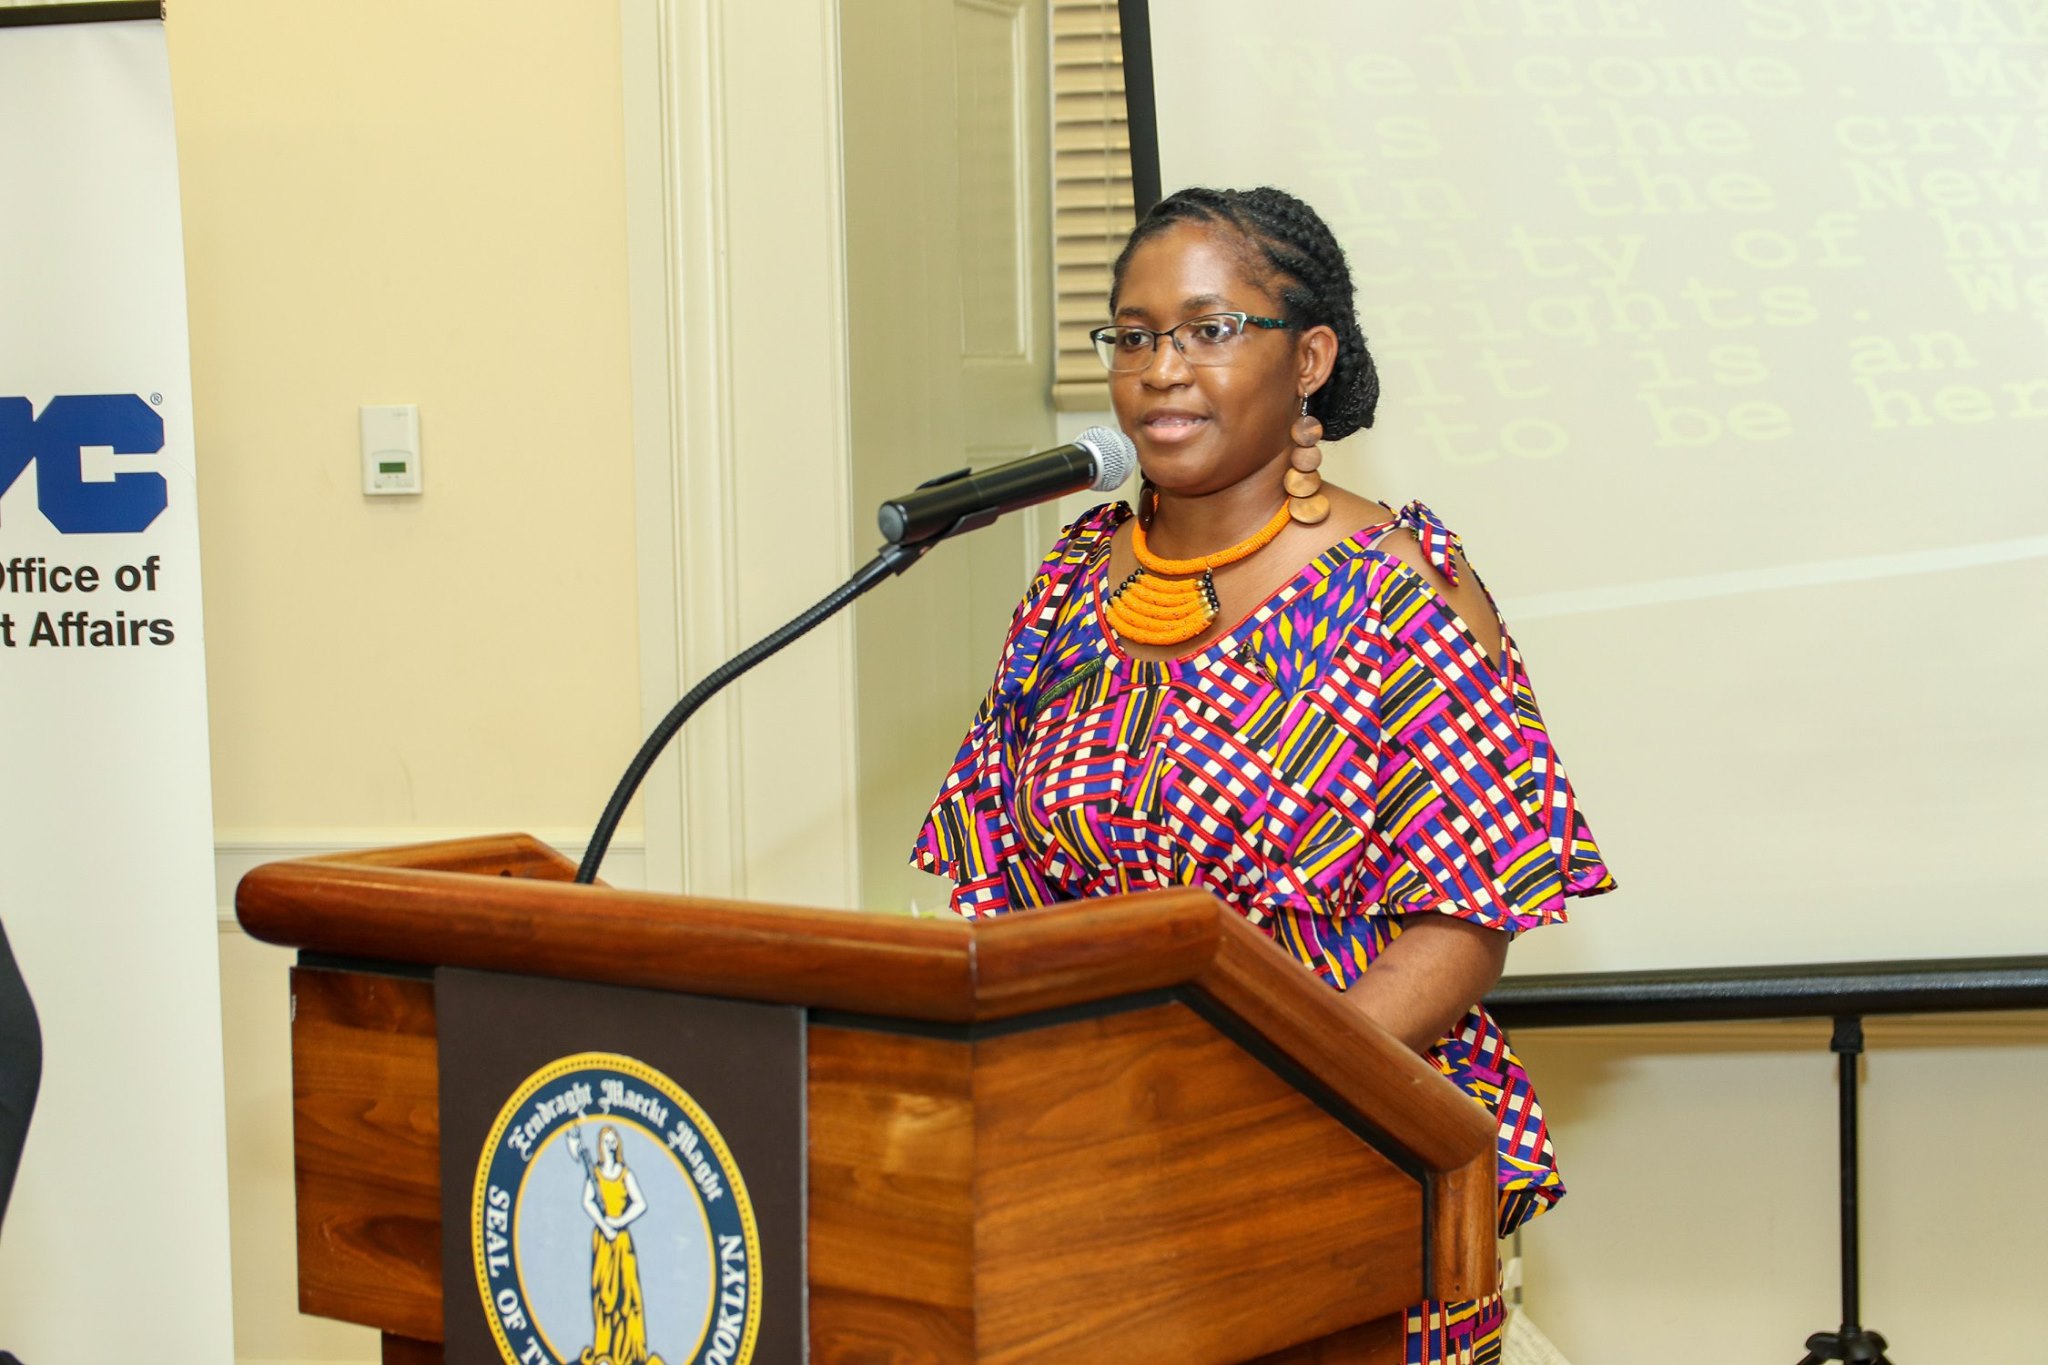 Christelle Onwu speaking at a podium.